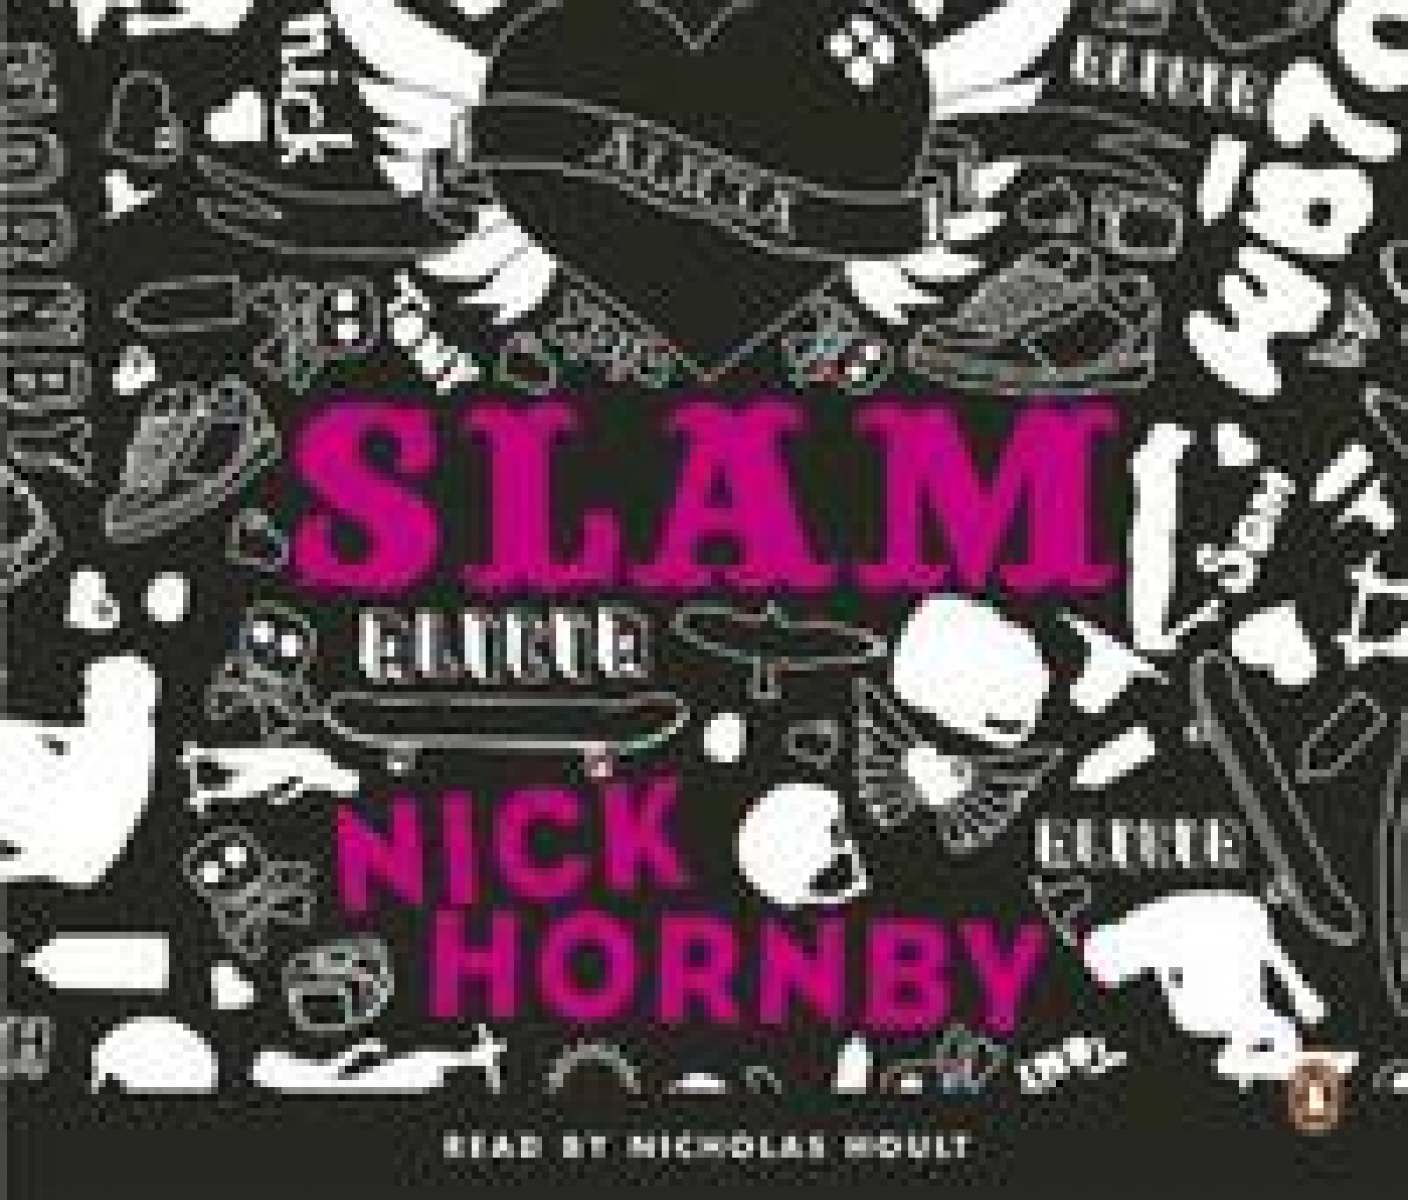 Nick, Hornby Slam. Audio CD 